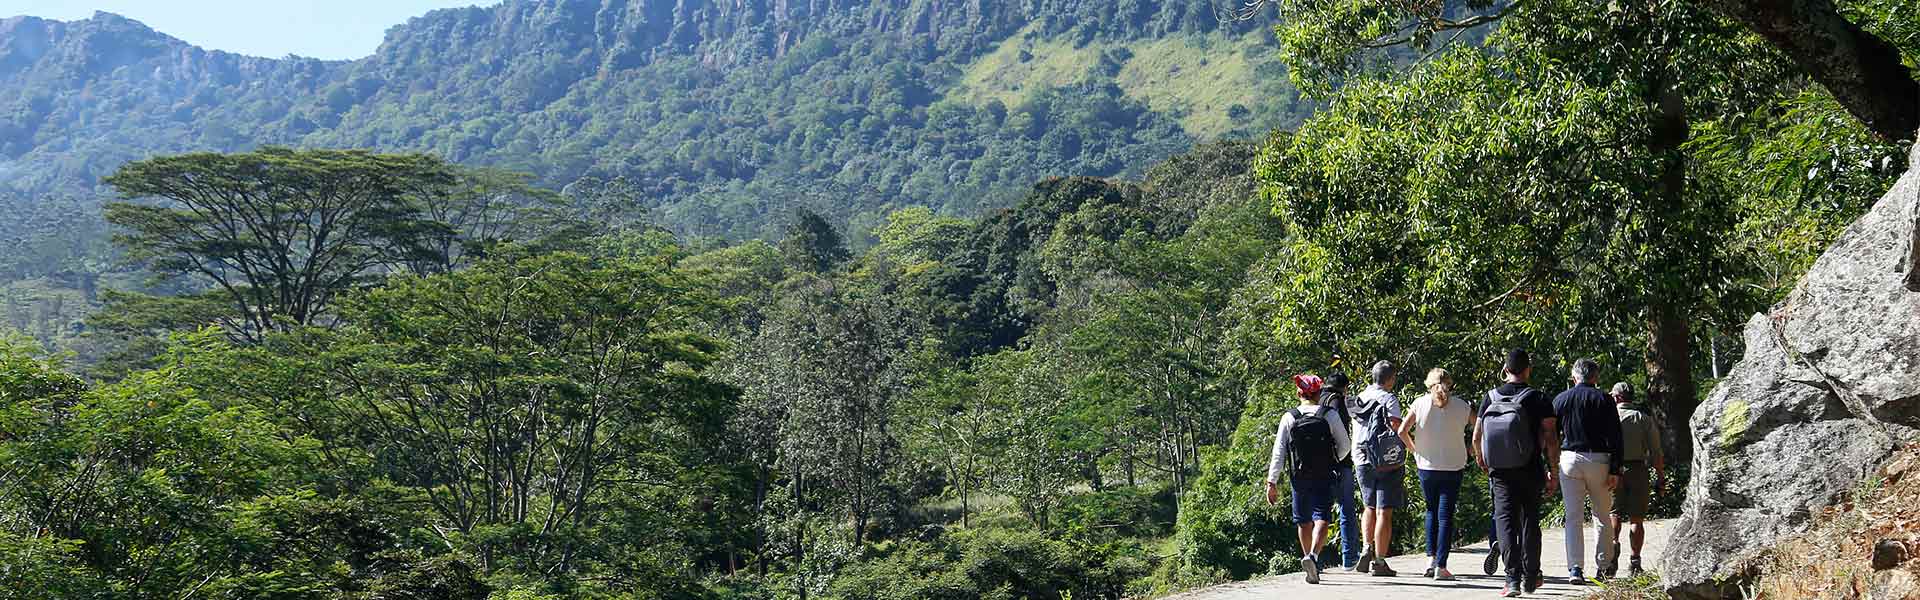 Hiking the Pekoe Trail in Kandy